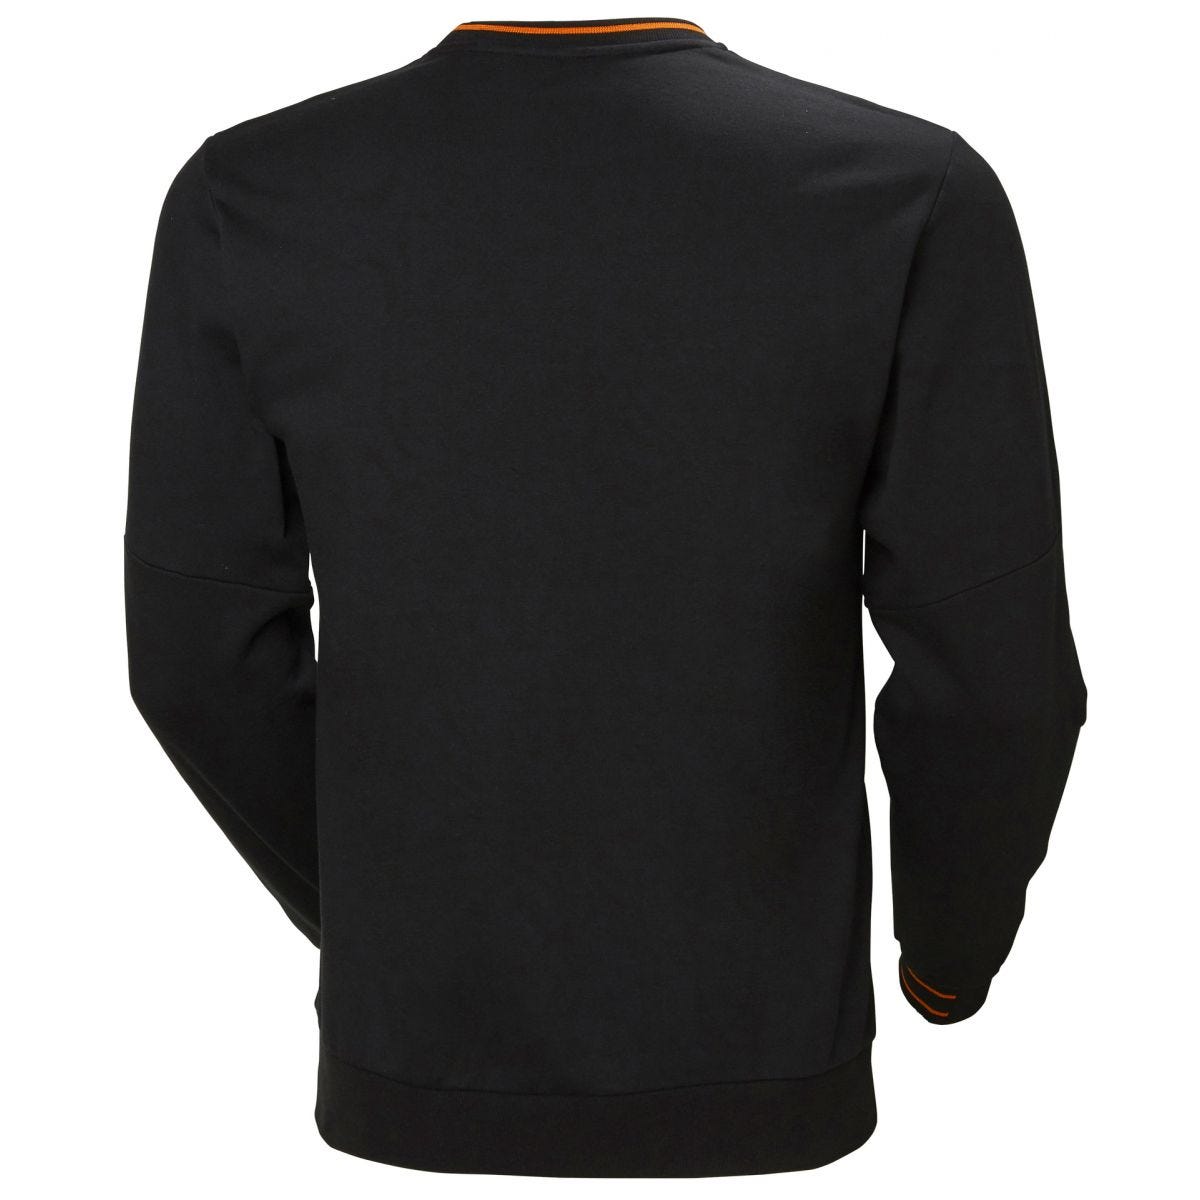 Sweatshirt Kensington Noir - Helly Hansen - Taille L 1